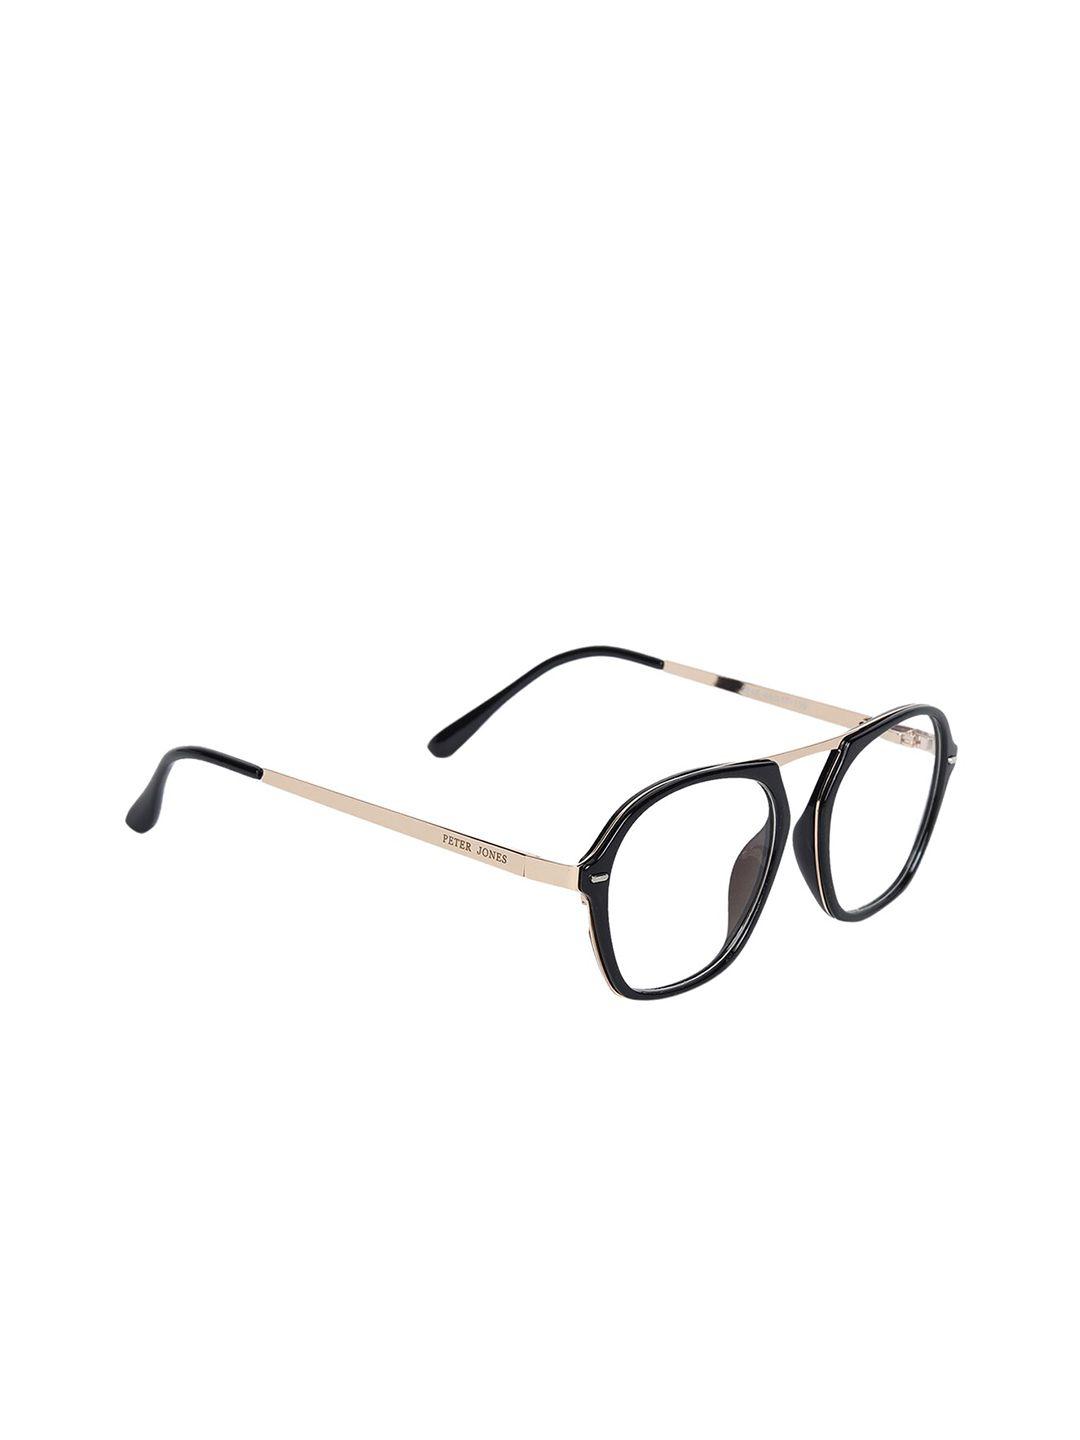 peter jones eyewear unisex black solid uv 400 light blocking glasses